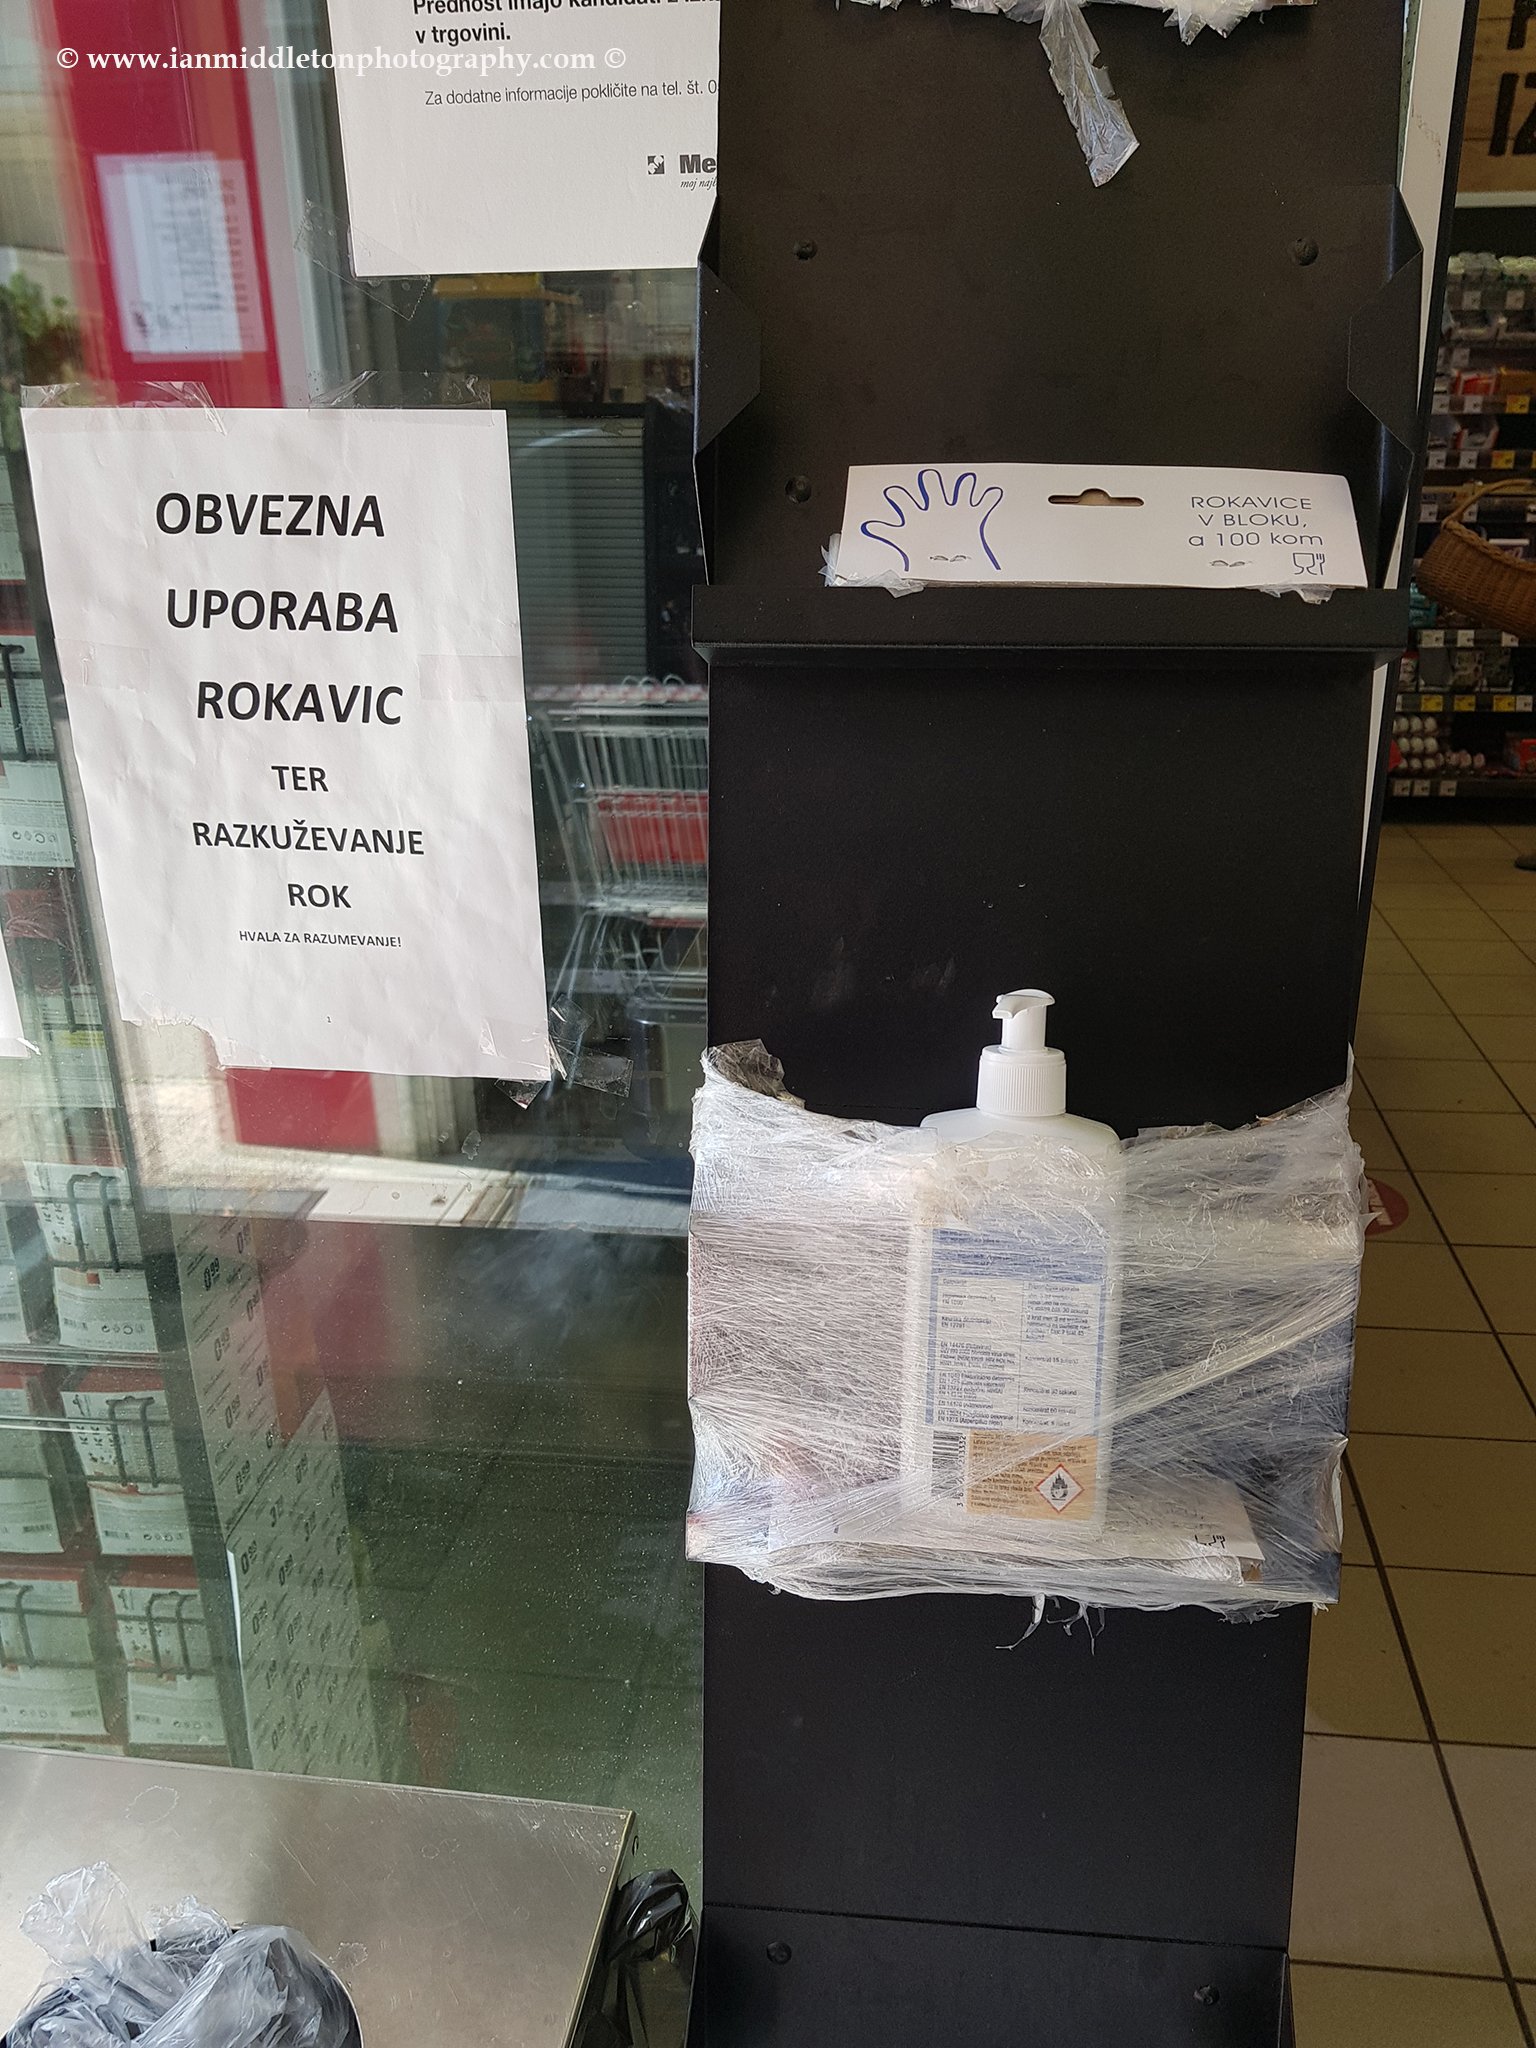 Hand sanitizer at Mercator supermarket entrance in a suburb of Ljubljana, Slovenia.. Mercator is Slovenia's largest supermarket chain. Taken 23-3-2020